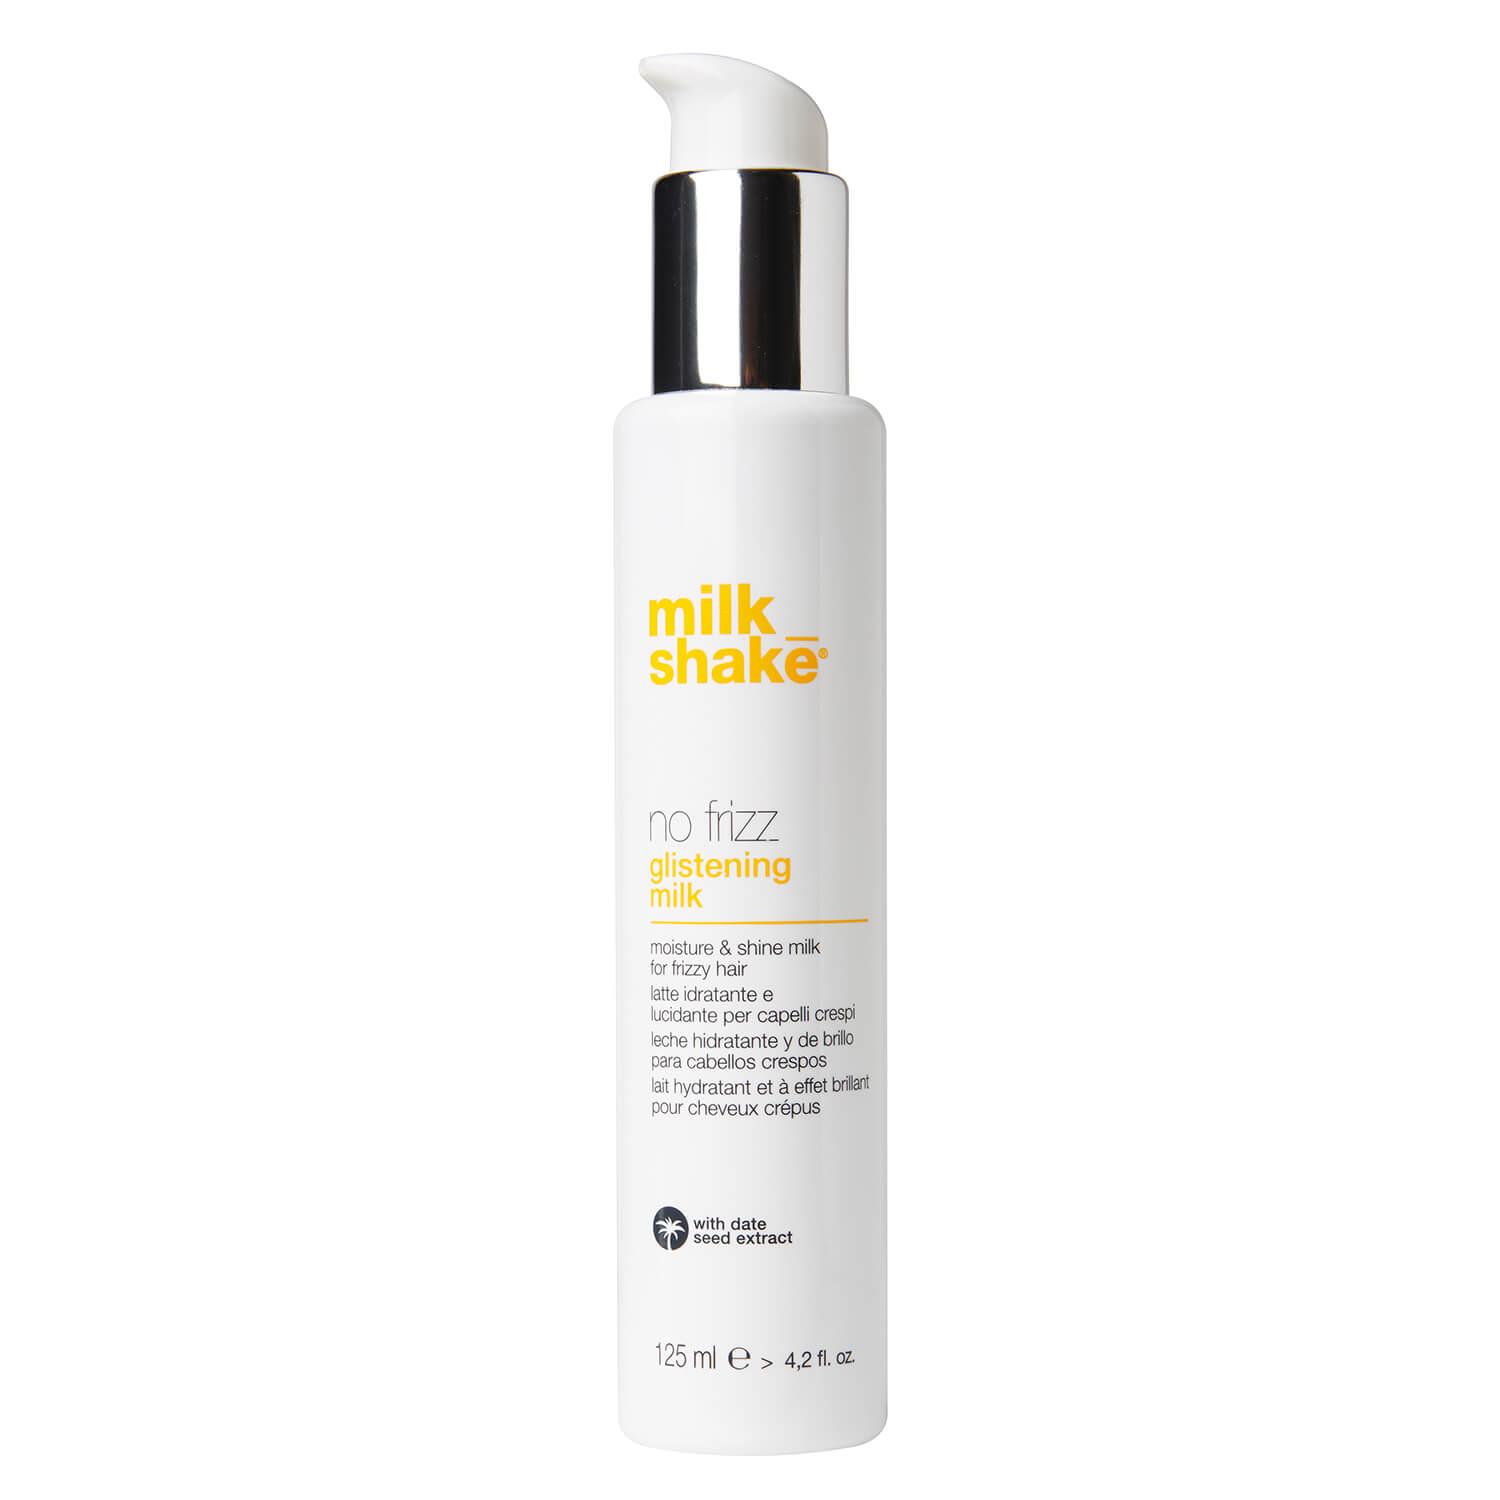 milk_shake no frizz - glistening milk